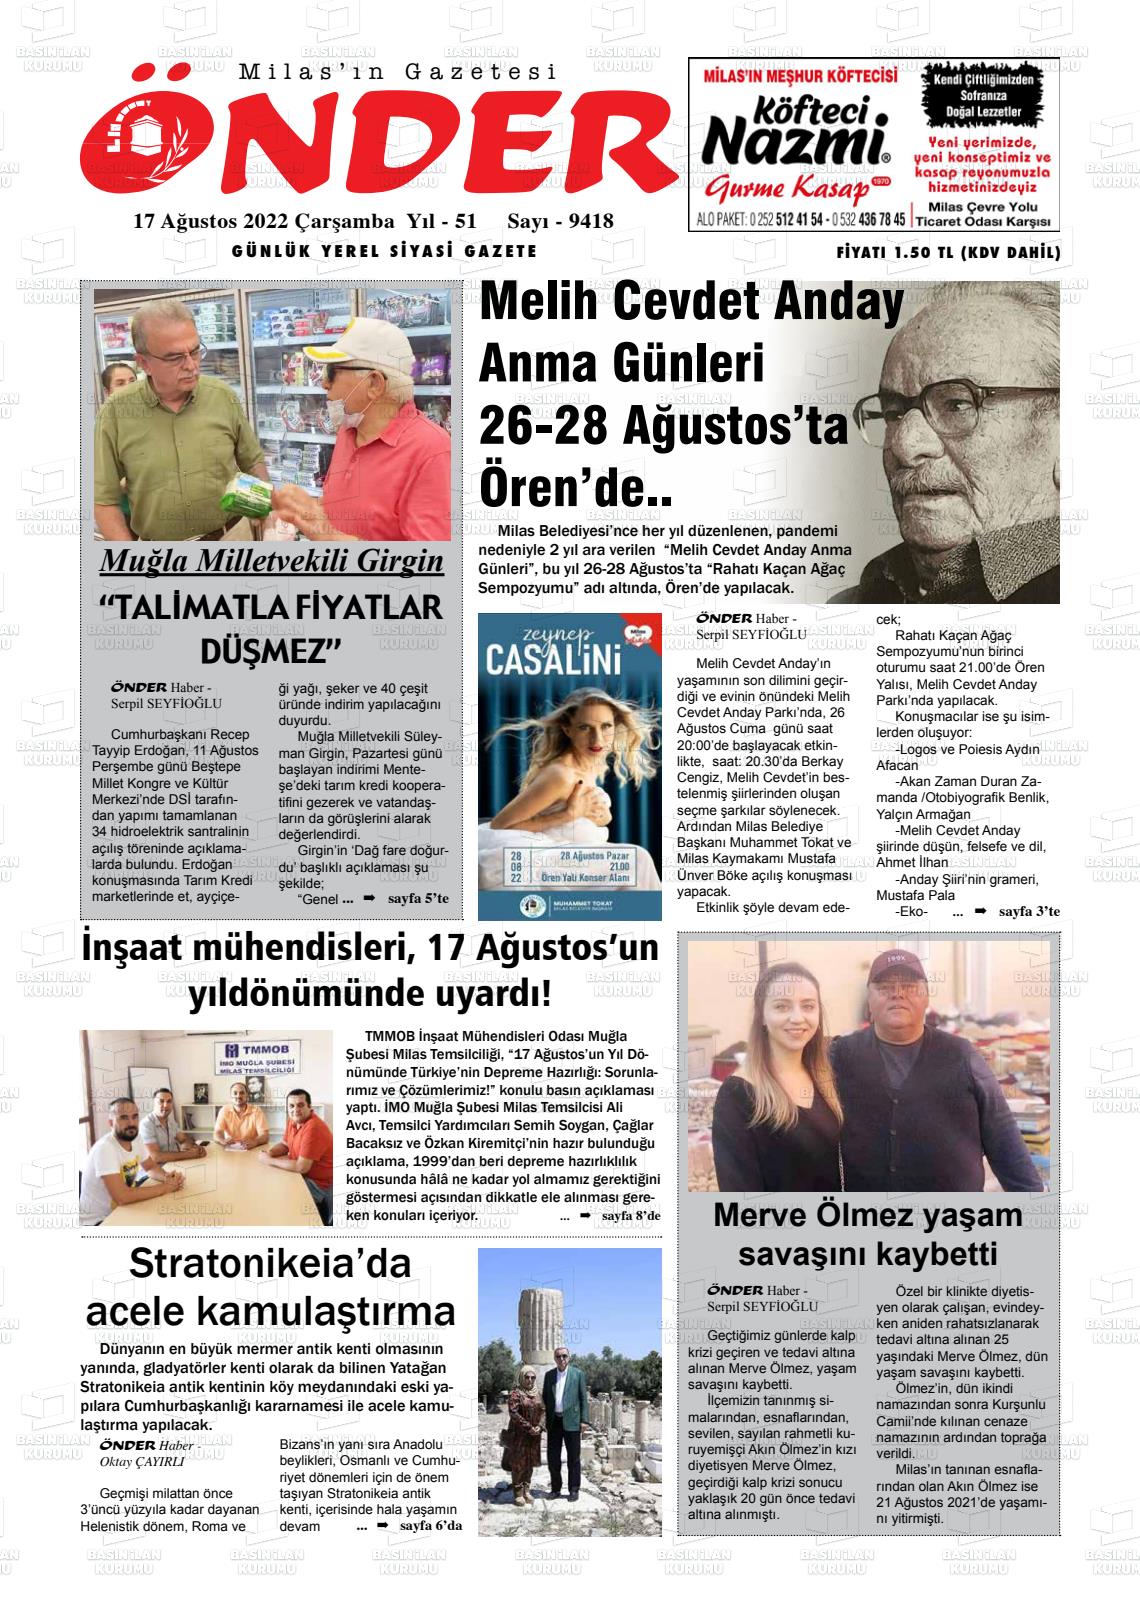 17 Ağustos 2022 Milas Önder Gazete Manşeti